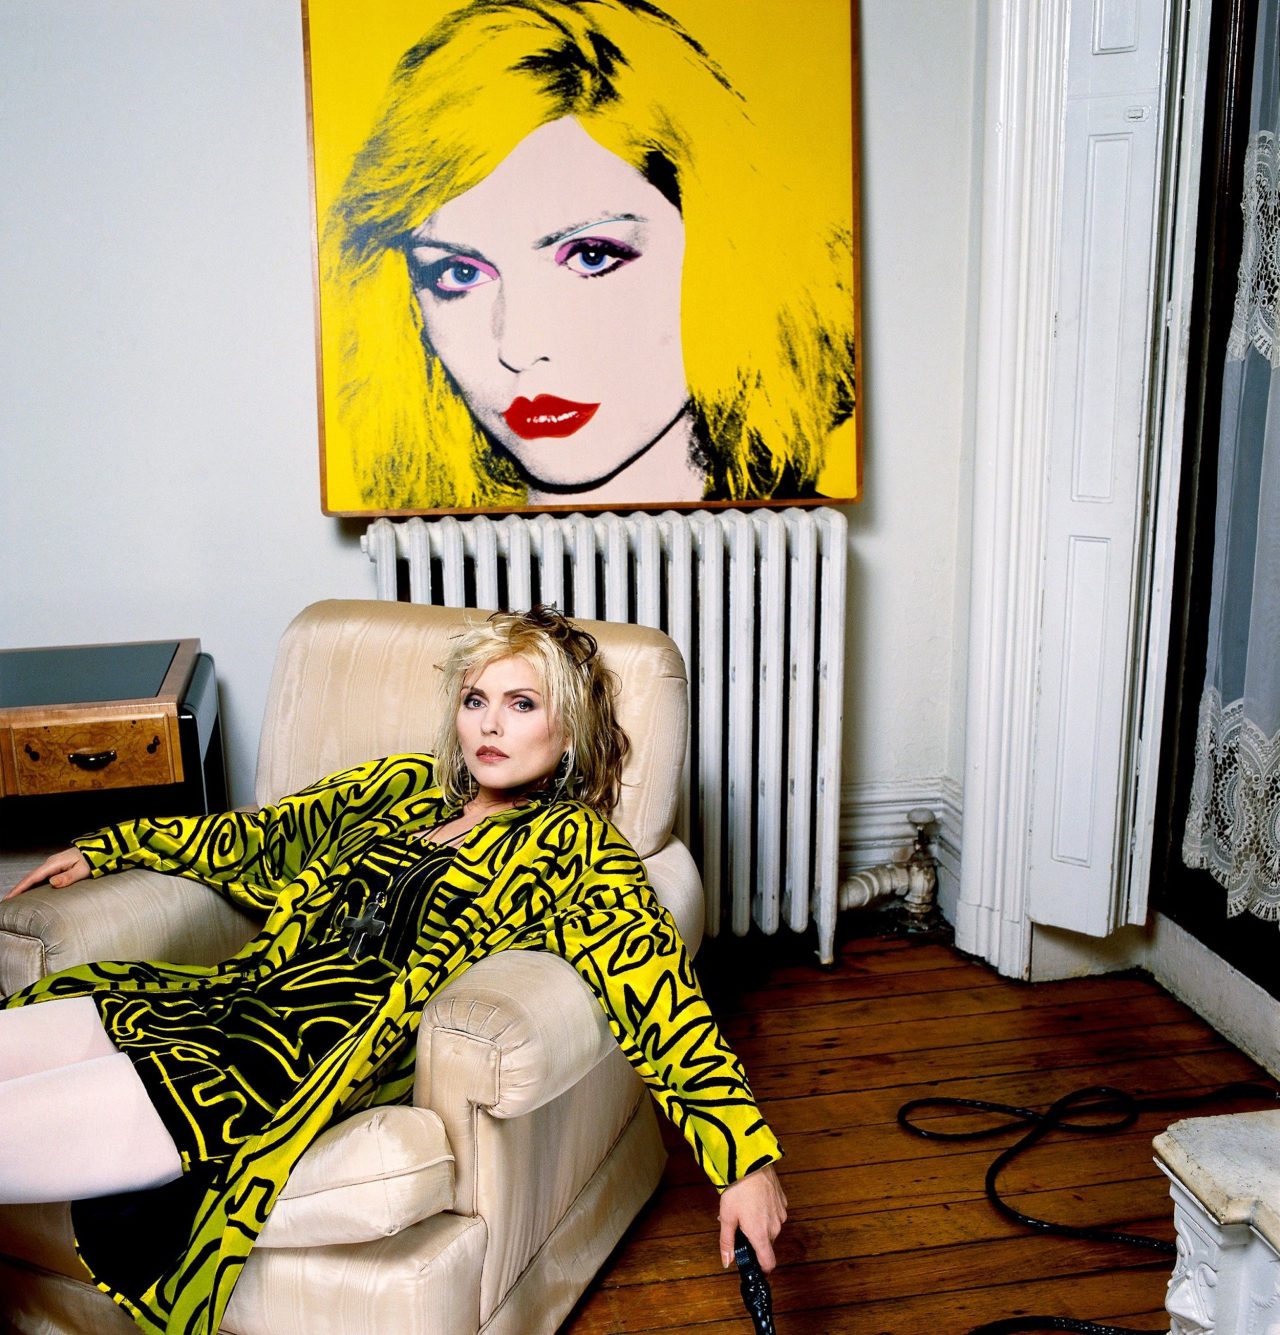 Punk Princess: ‘Devastatingly Sexy’ Portraits of Debbie Harry 1977 to 1988